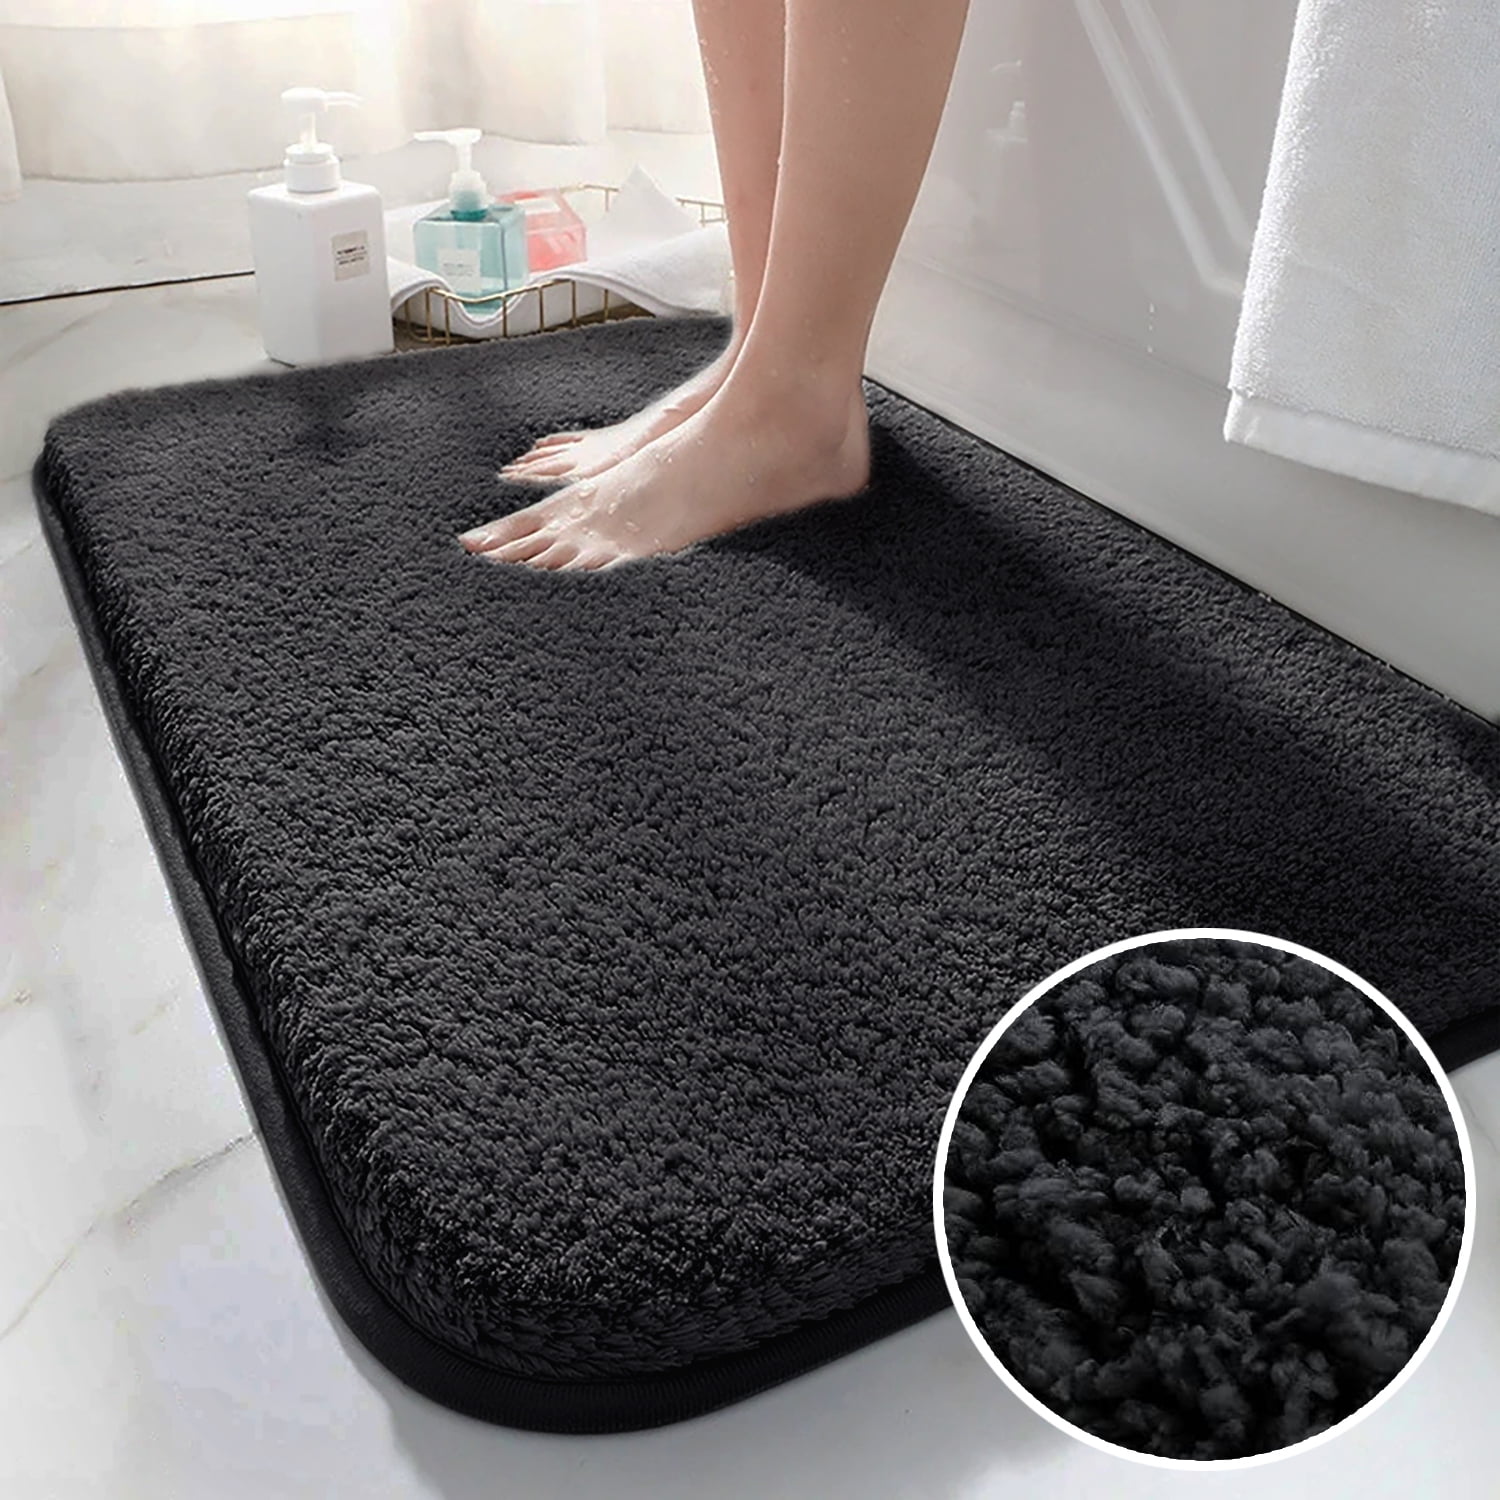 Color&Geometry Black Bathroom Rugs- Non Slip, Absorbent, Thick, Soft,  Washable Bath Mat, 20x32 Small Bath Rug Bath Mats for Bathroom Floor,  Shower